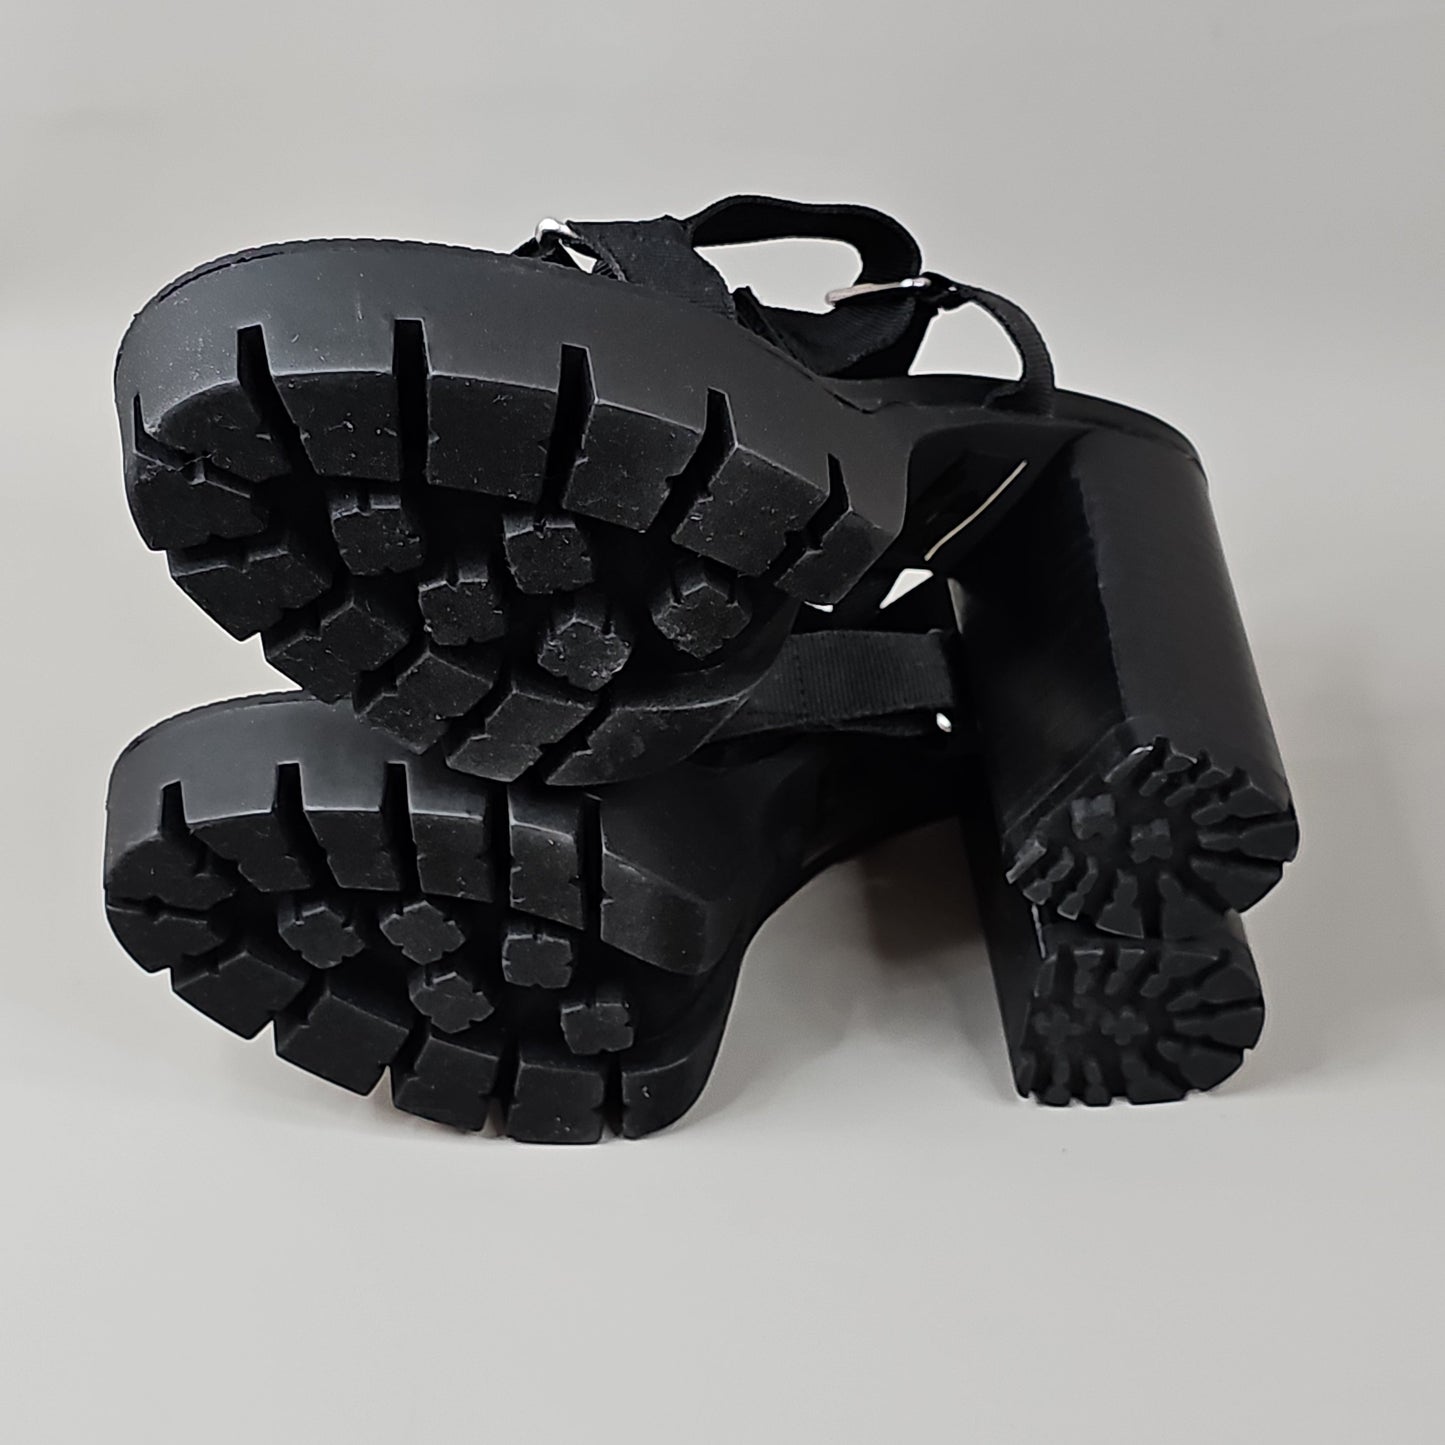 CHARLES BY CHARLES DAVID Women's Vast Sport Sandal Shoe Sz 5.5 M Black (New)